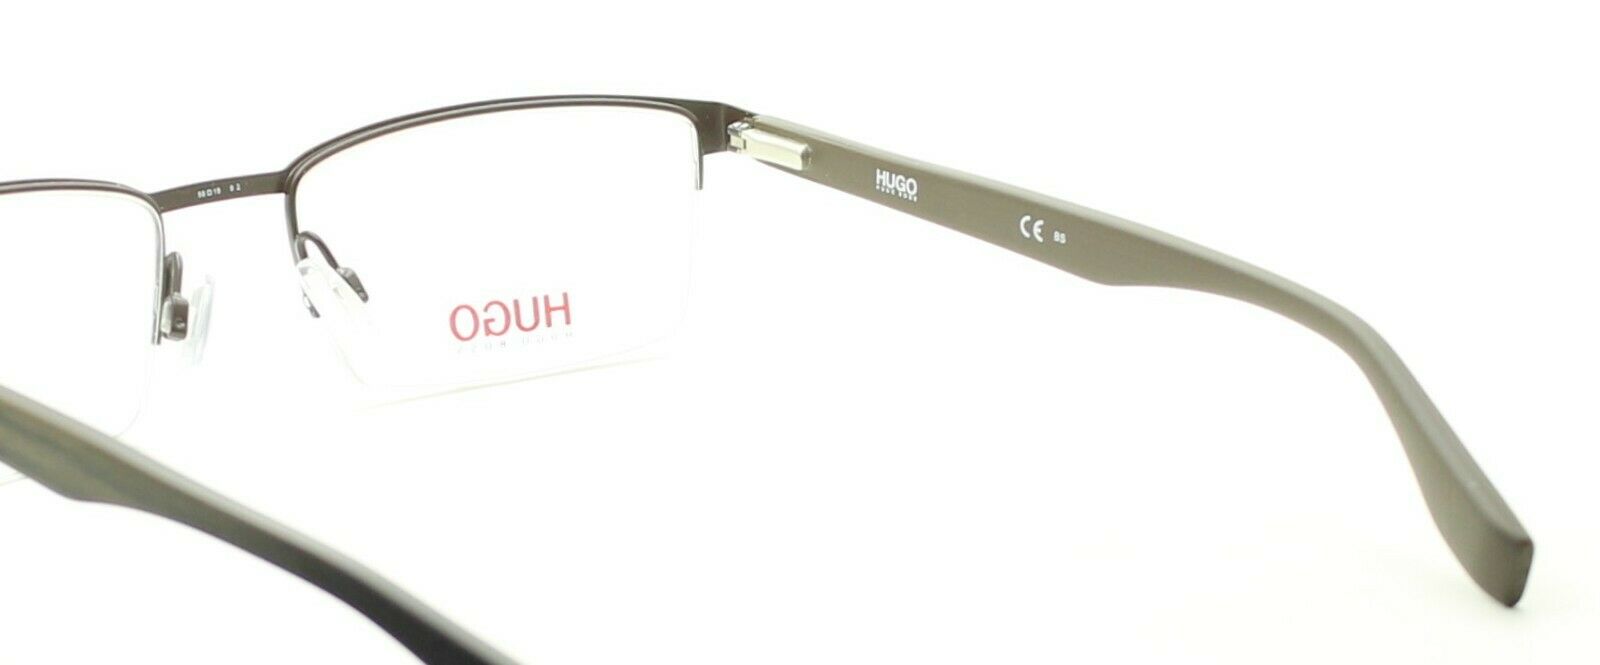 HUGO BOSS HG 0324 2X0 55mm Eyewear FRAMES Glasses RX Optical Eyeglasses - Italy